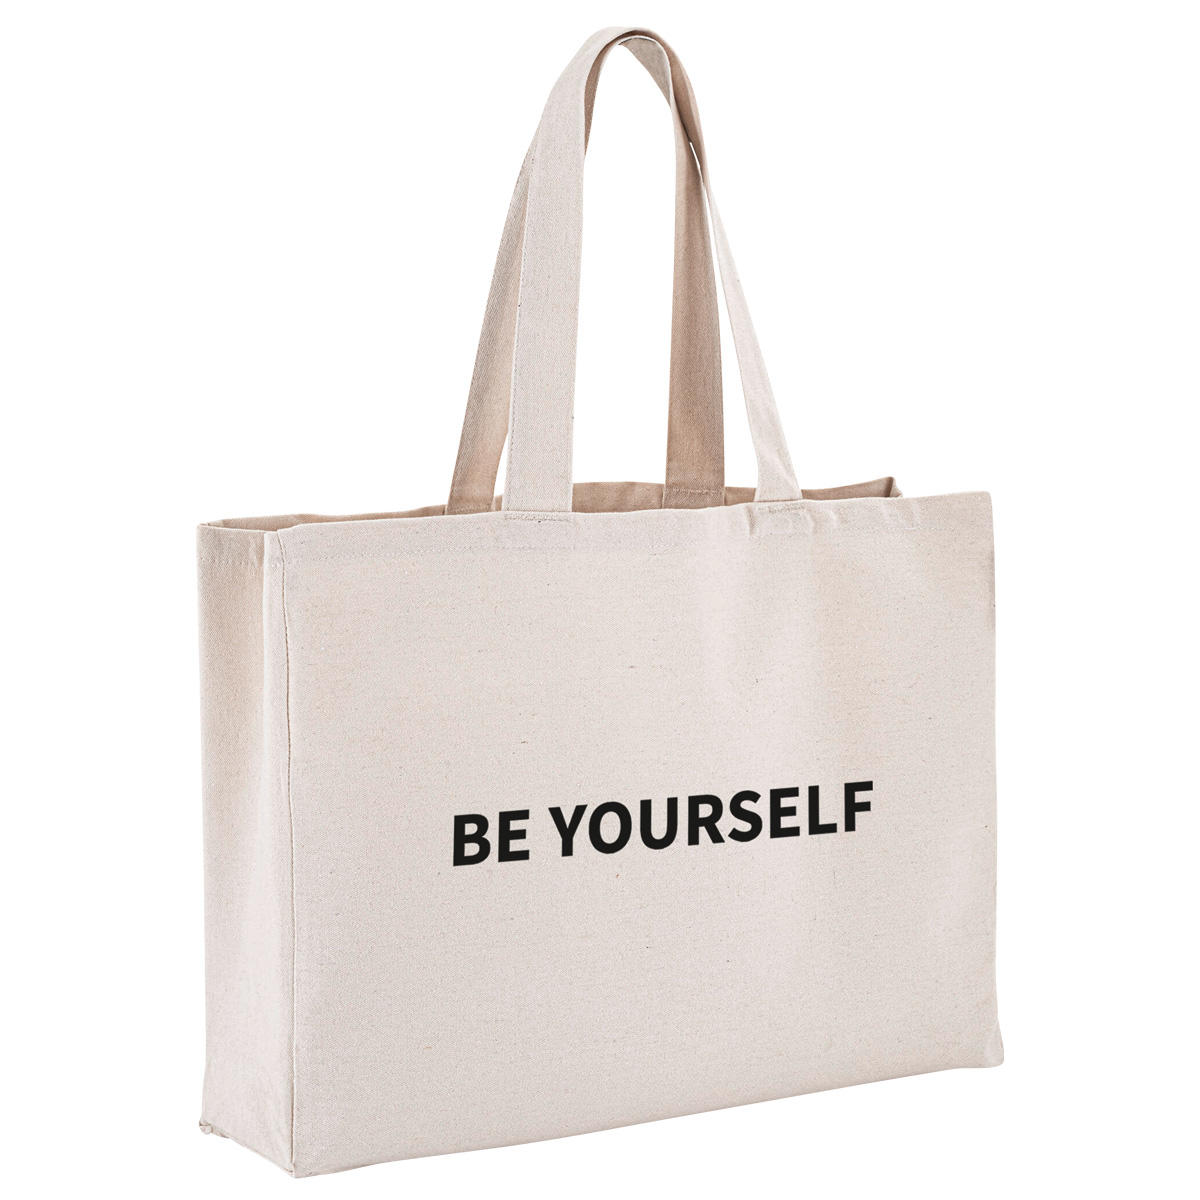 baslerbeauty Beach bag & shopper be yourself  - 2